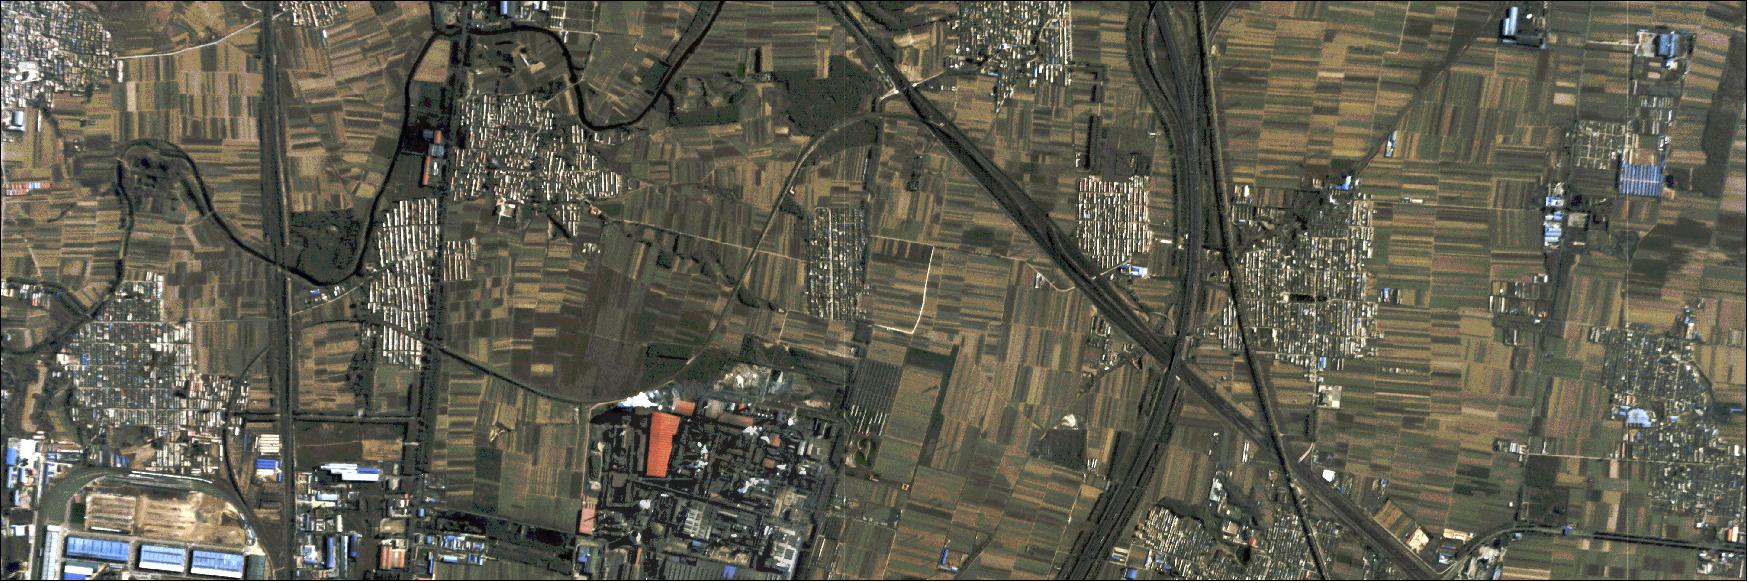 Figure 19: BlackSky Pathfinder-1 scene showing farms and industrial sites around Beijing, China (image credit: Spaceflight Industries, BlackSky)